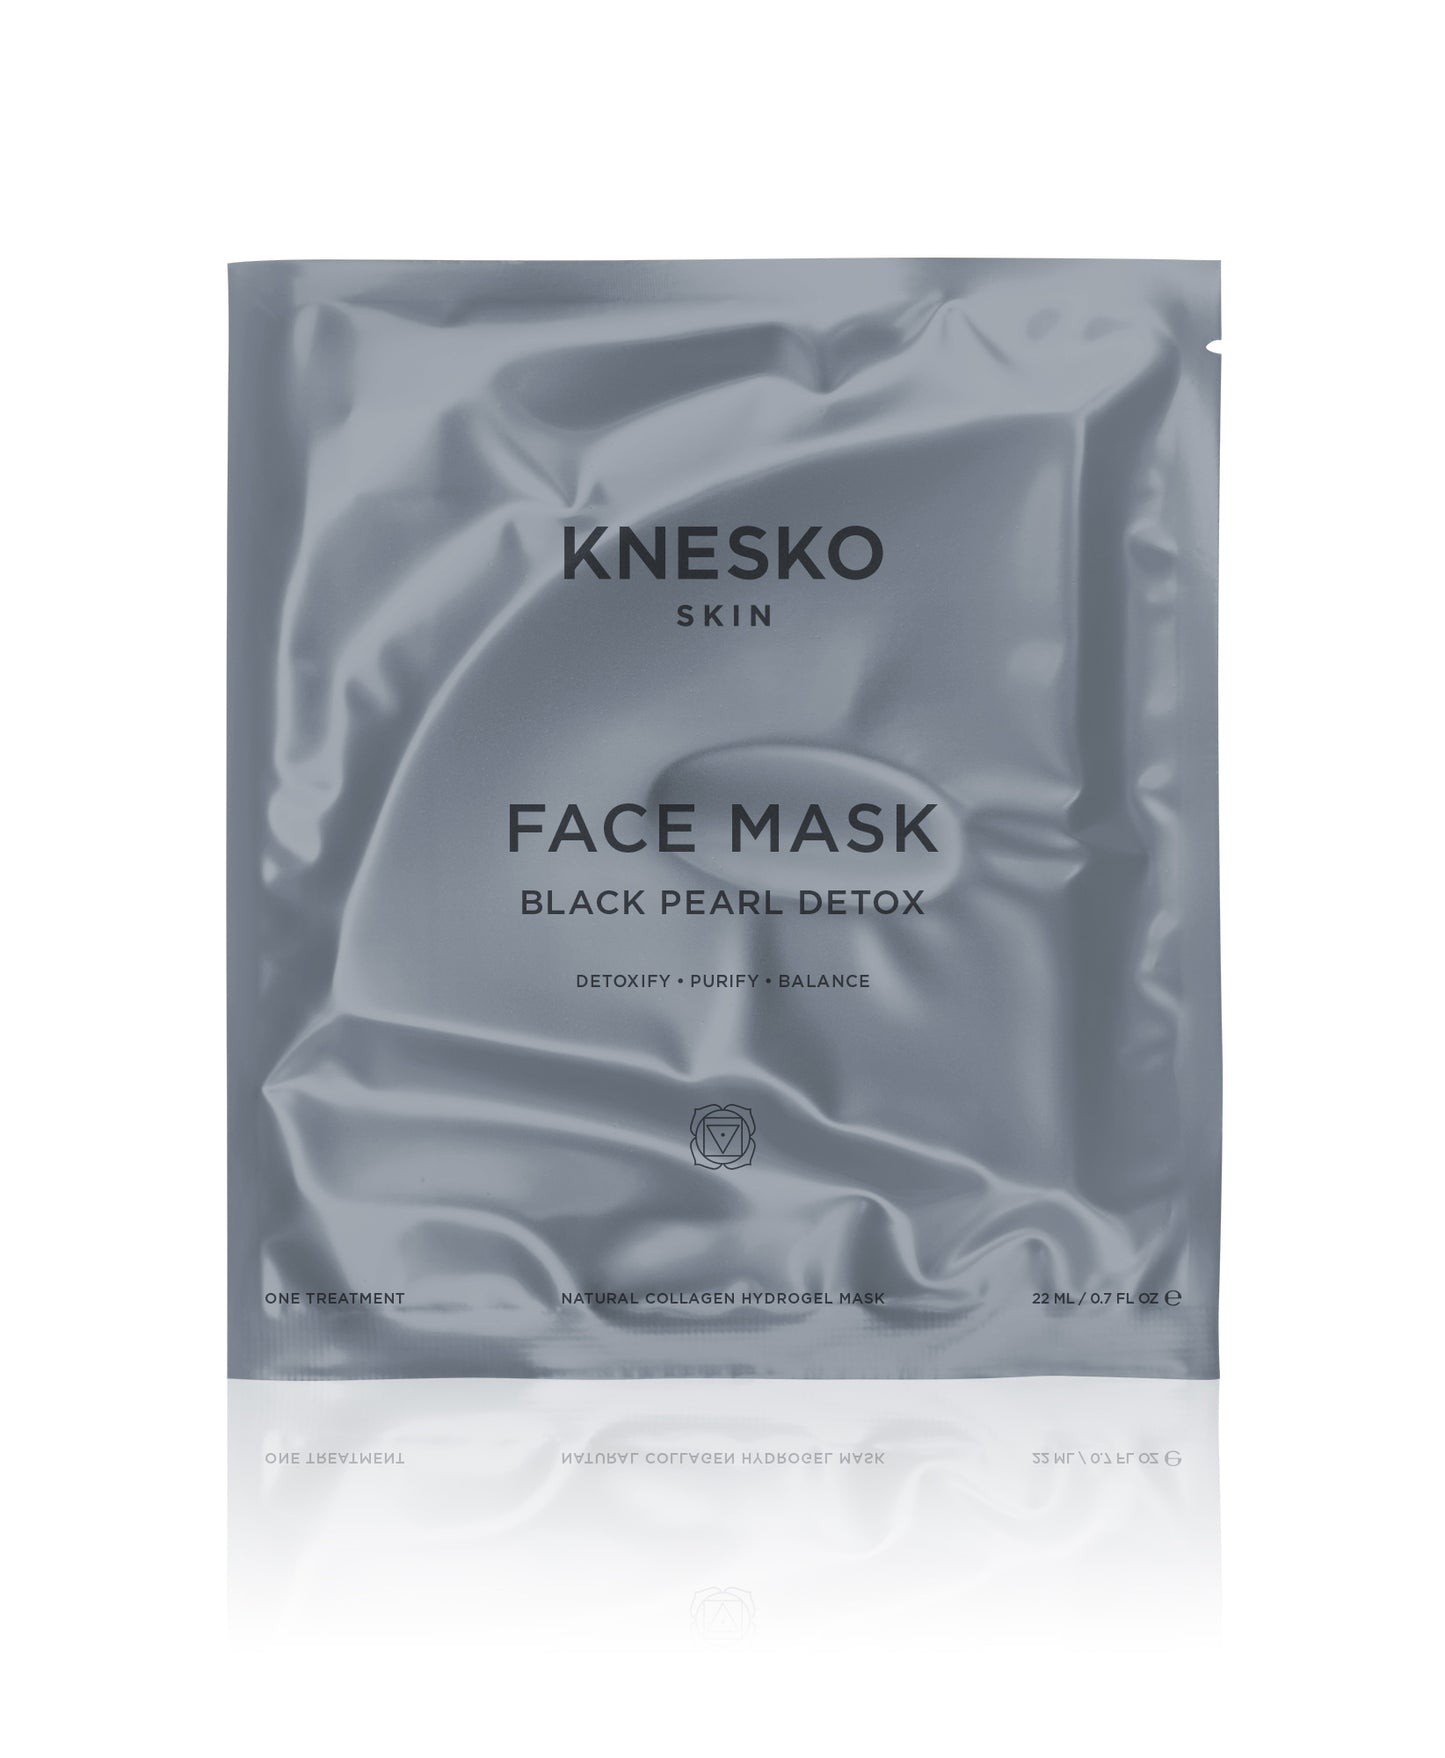 Black Pearl Detox Collagen Face Mask packaging.